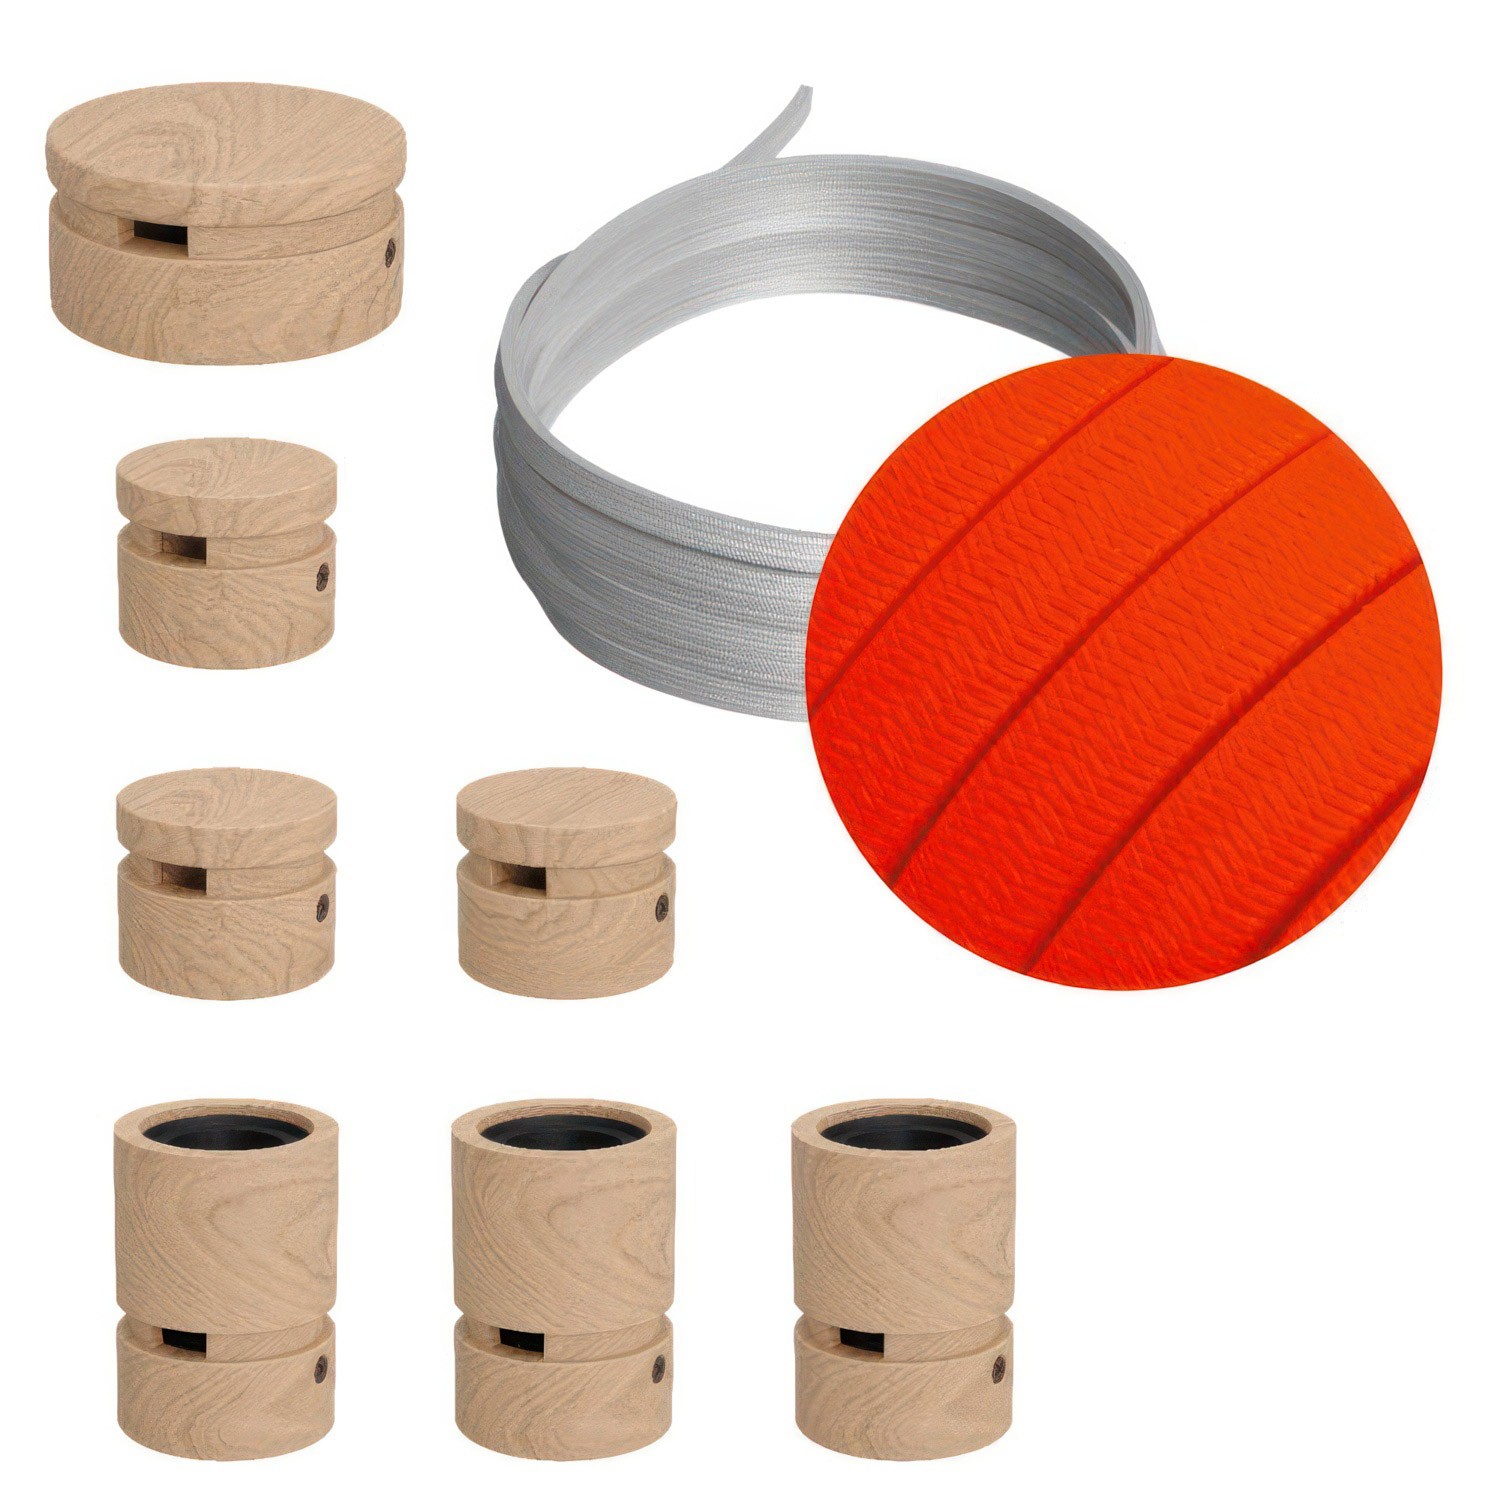 Kit "Linear" Filé System - con 5m cable textil guirnalda y 7 accesorios de madera